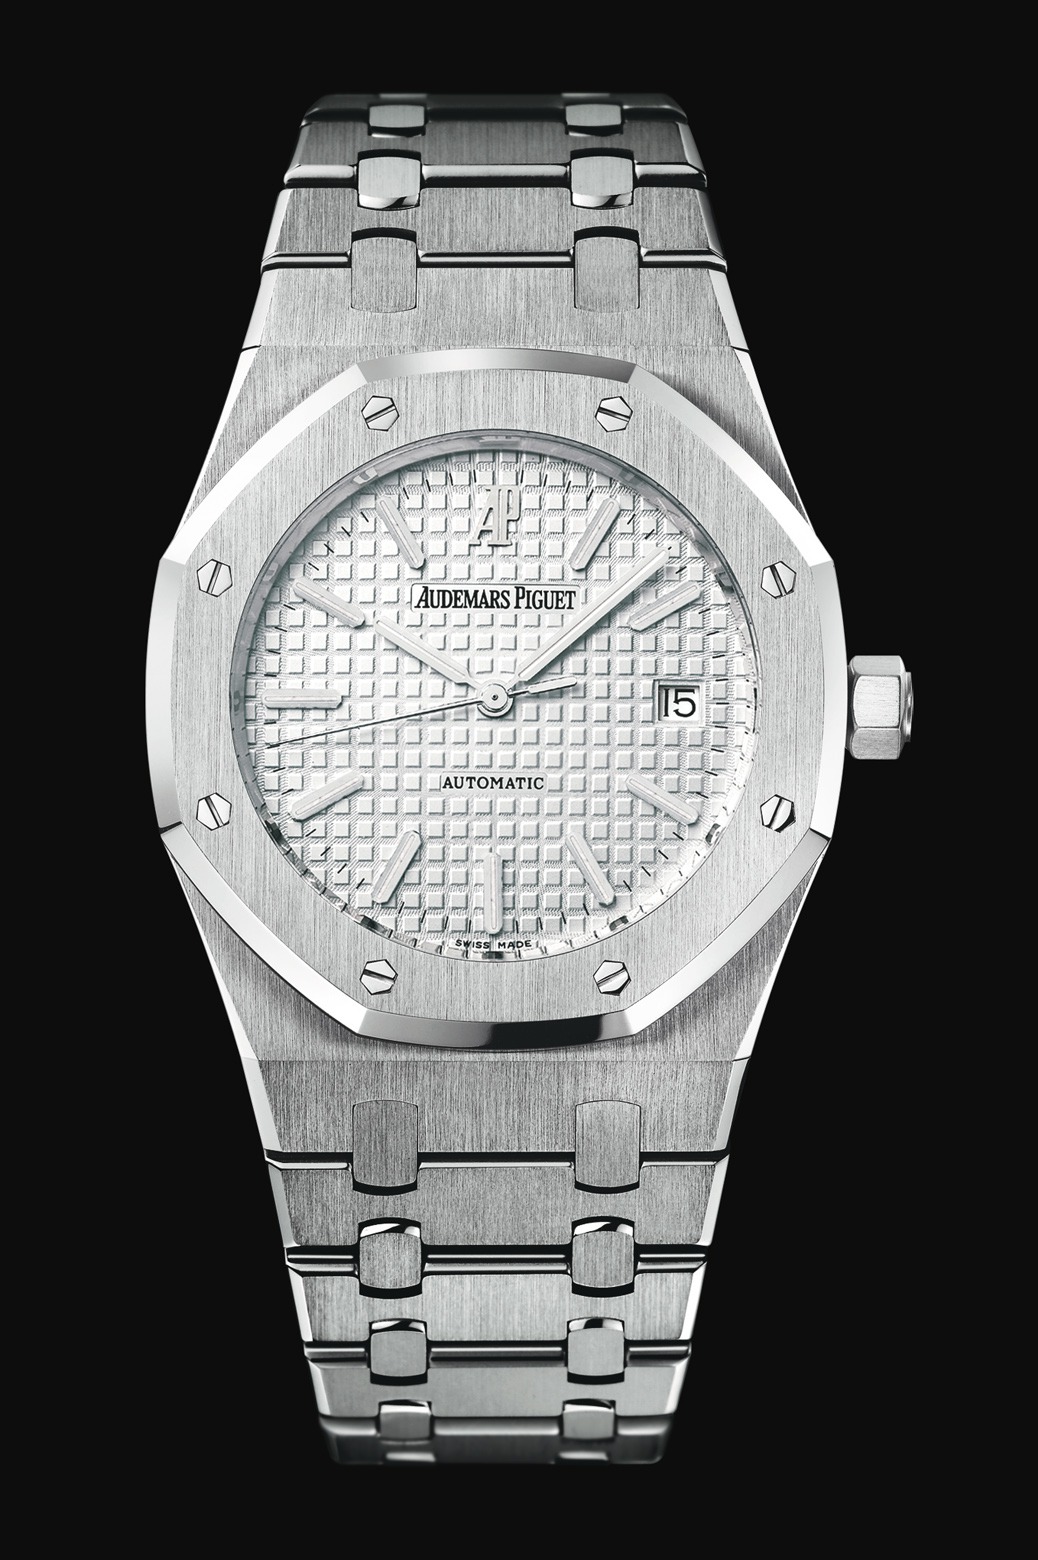 Audemars Piguet Royal Oak Automatic Steel watch REF: 15300ST.OO.1220ST.01